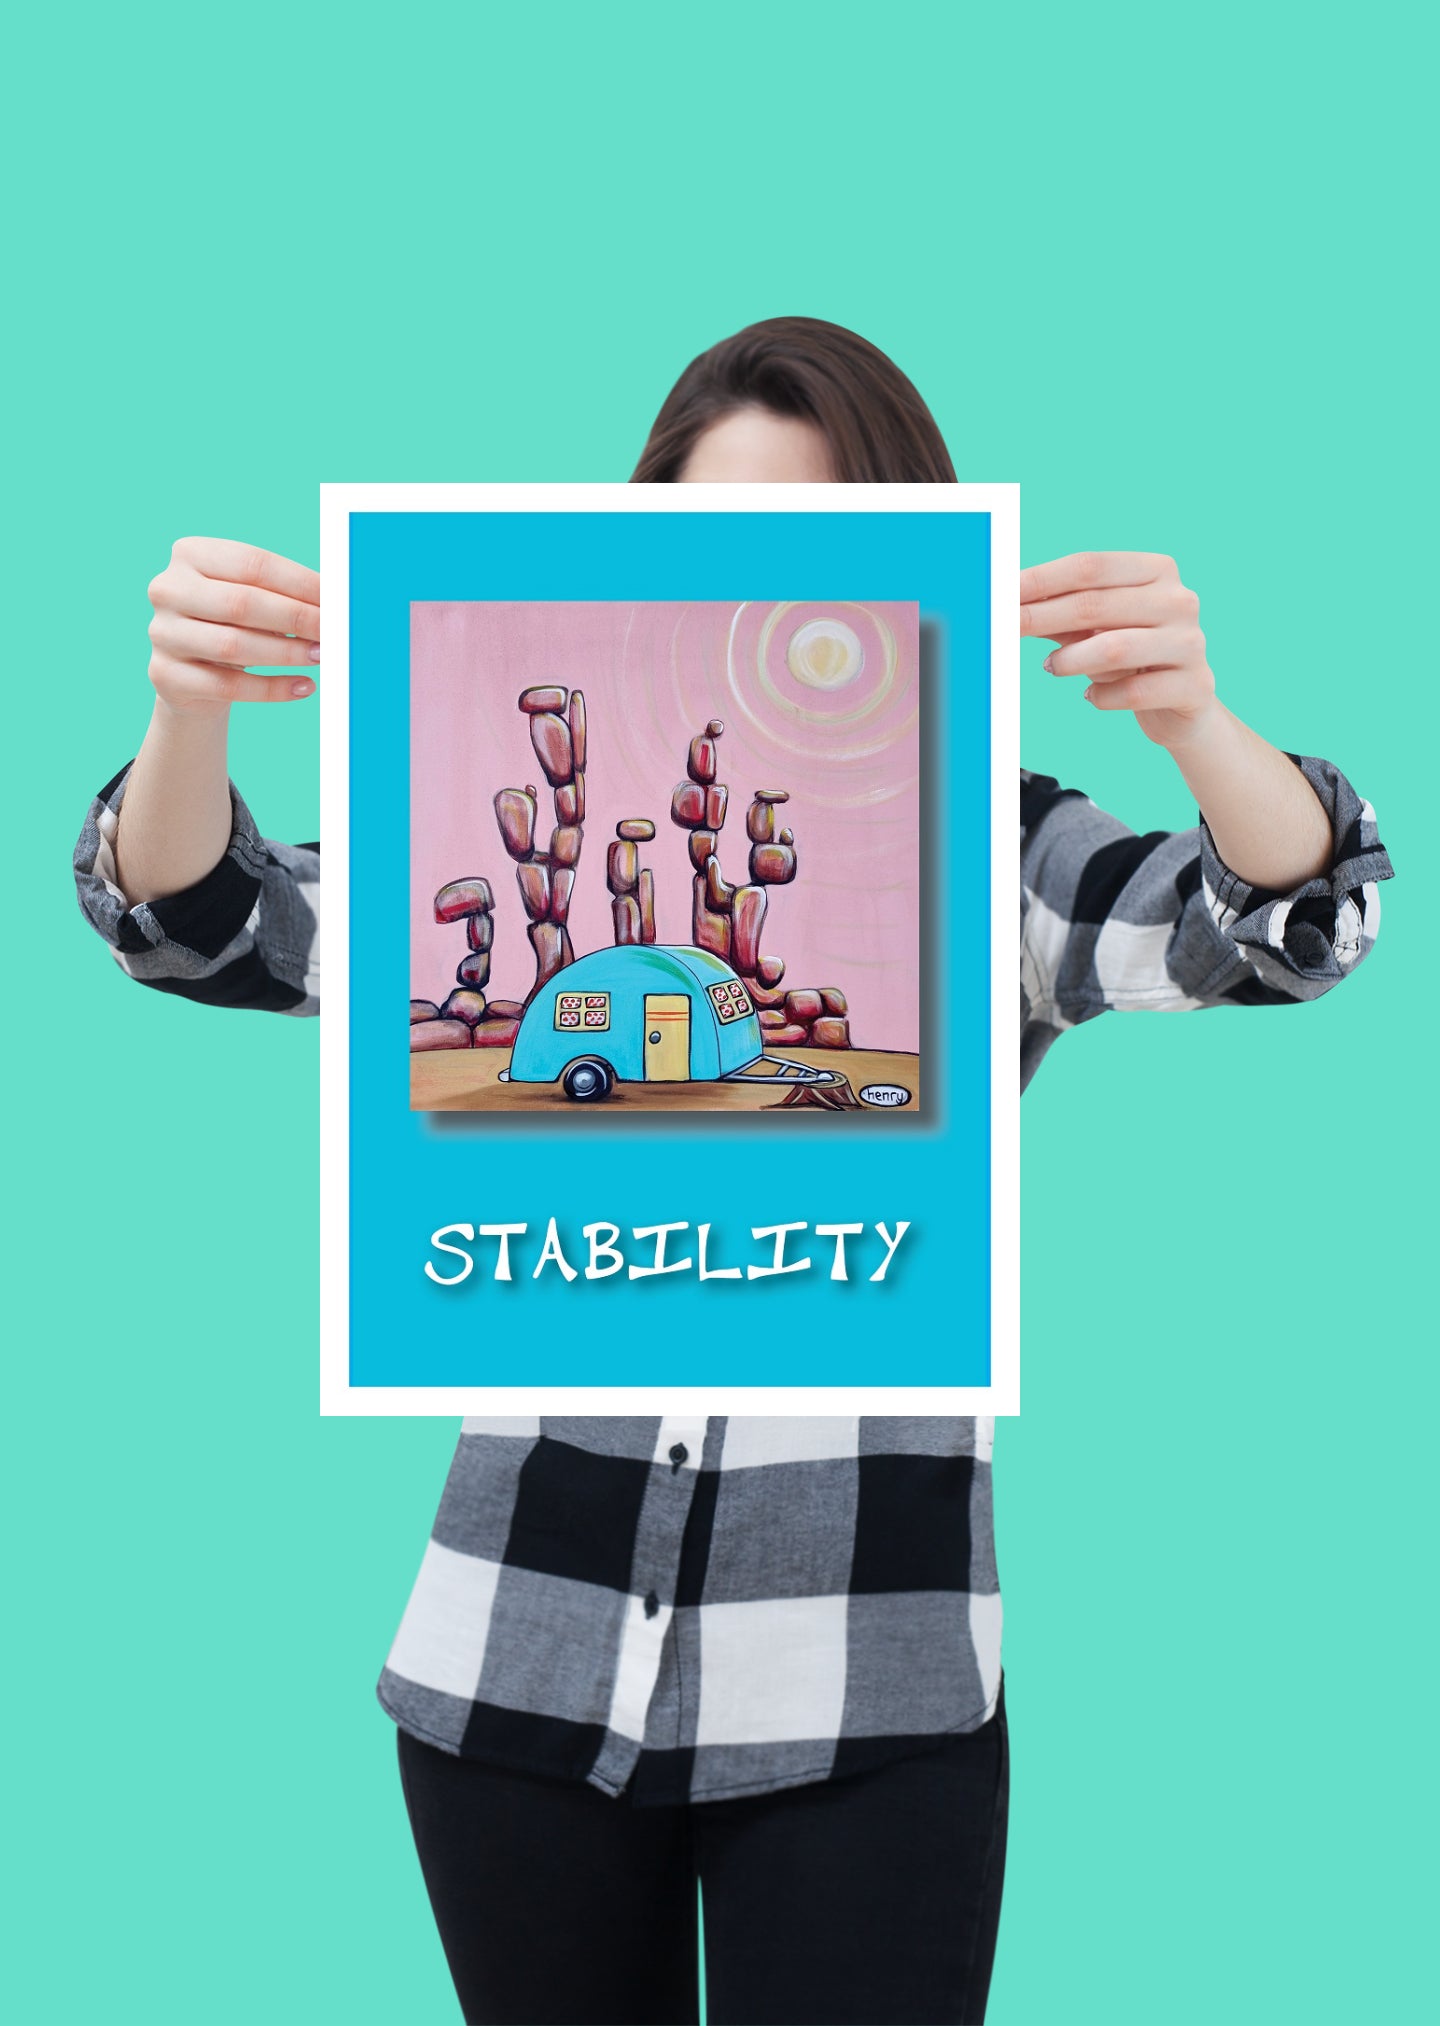 Stability - A Radical Abundance Poster